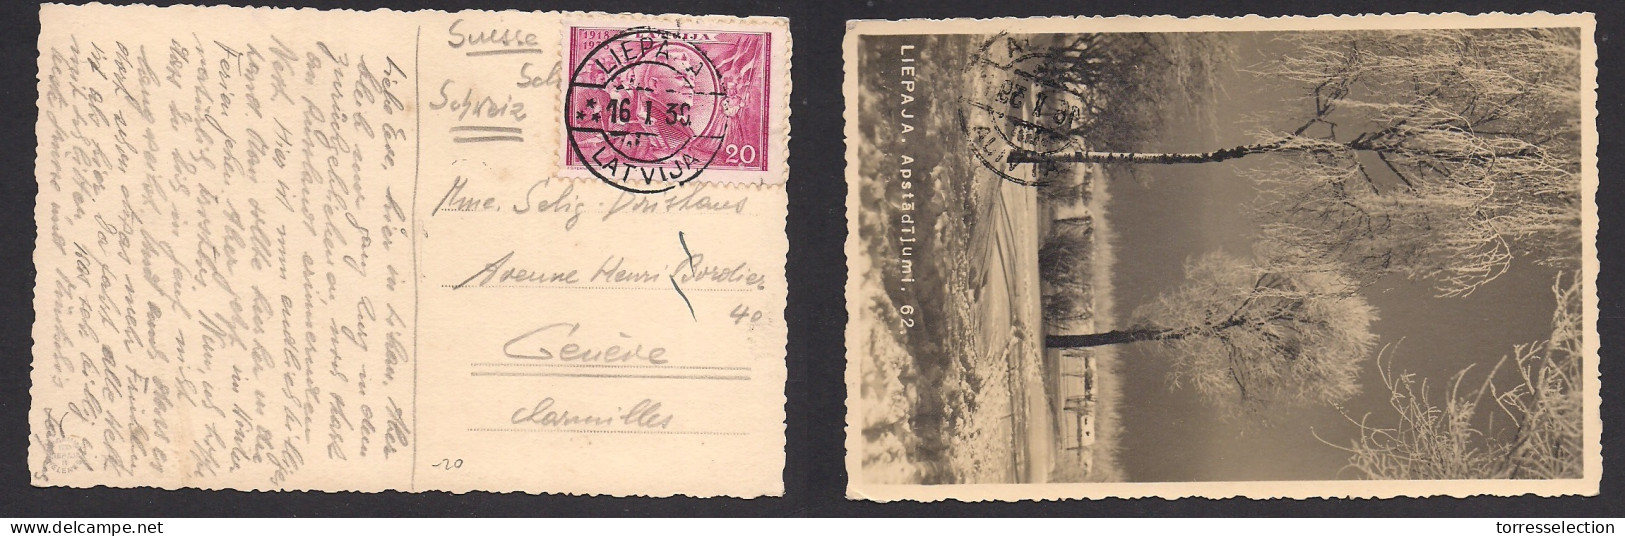 LATVIA. 1939 (16 Jan) Liepaja - Switzerland, Geneve. Single 20c Violet Fkd Ppc. Fine. XSALE. - Letonia